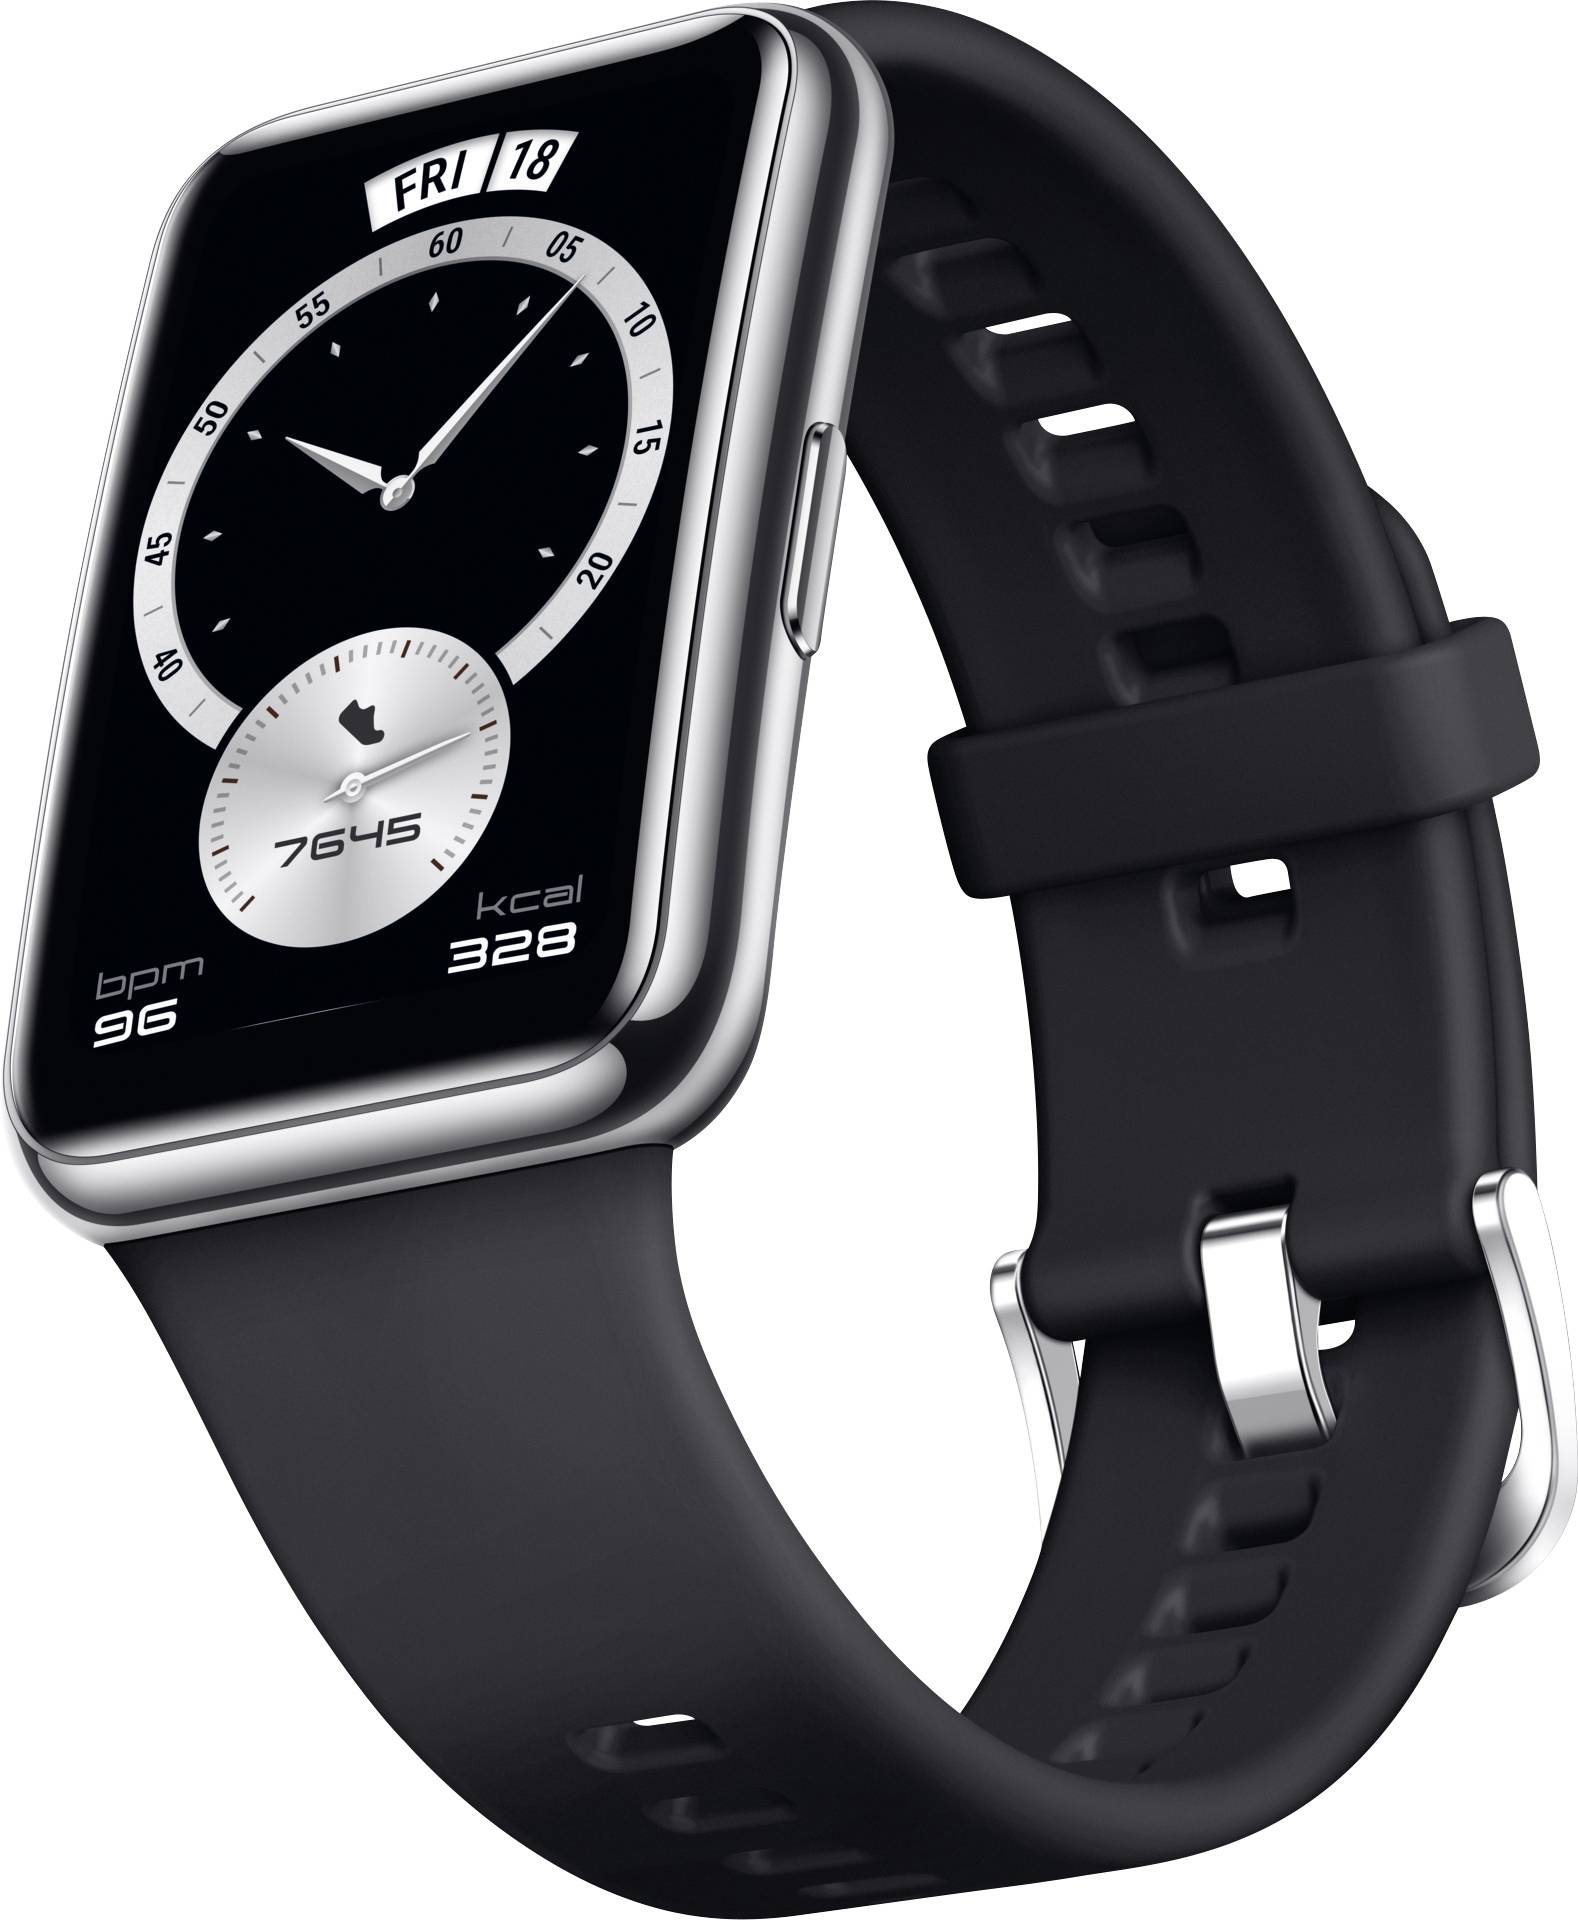 HUAWEI Watch Fit Smartwatch Black | Conrad.com